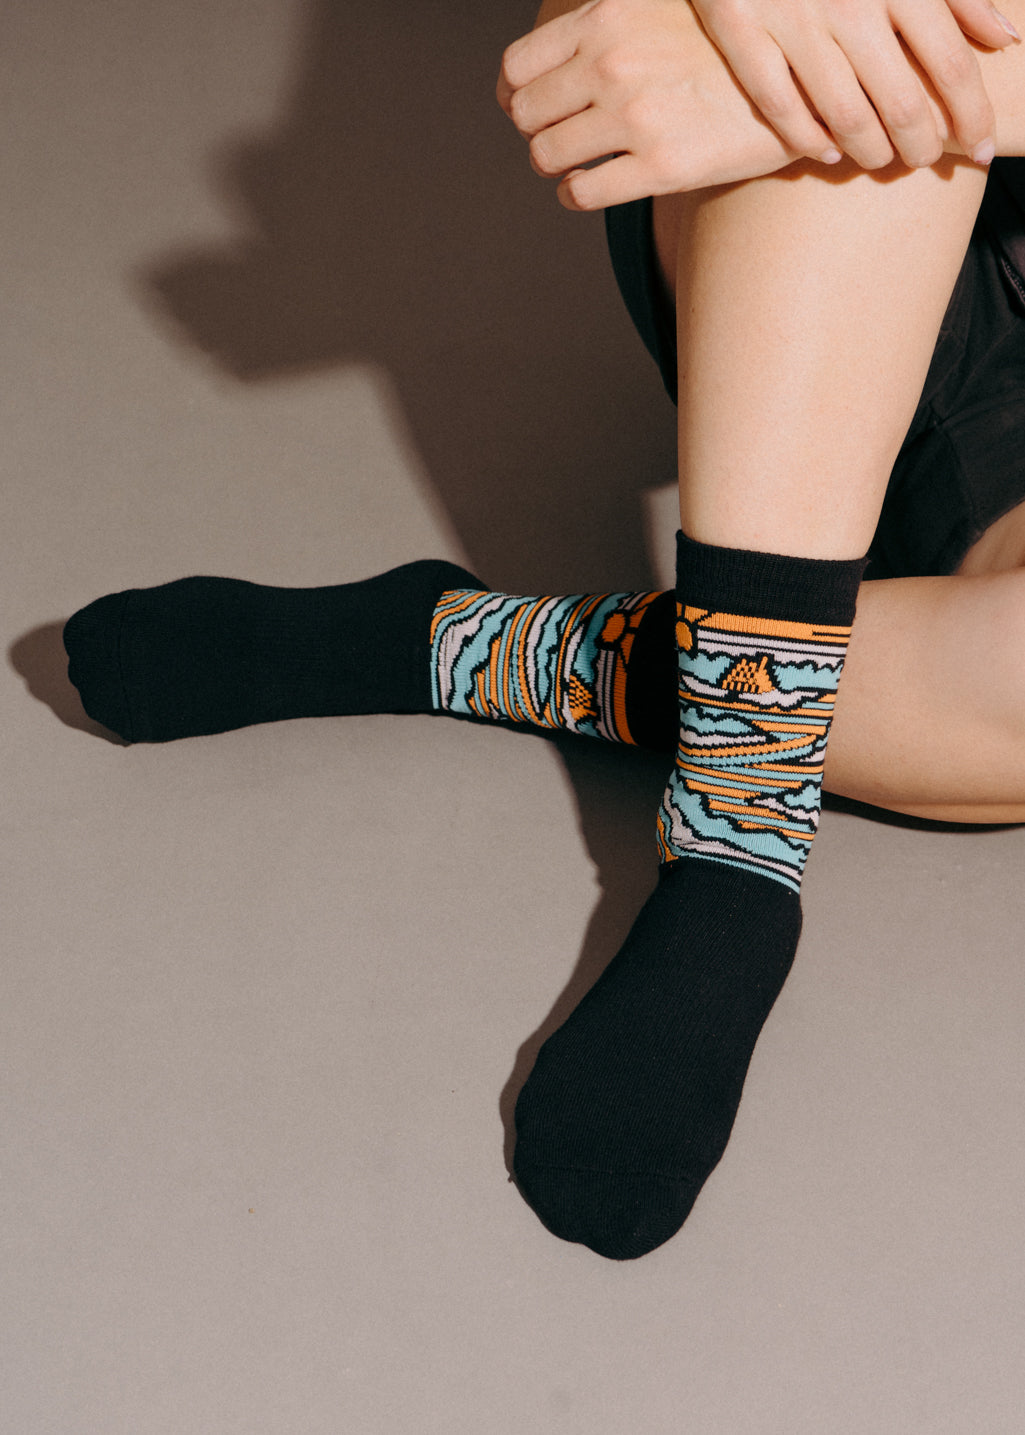 Woven Woodlands Socks | Black - Hardpressed Print Studio Inc.